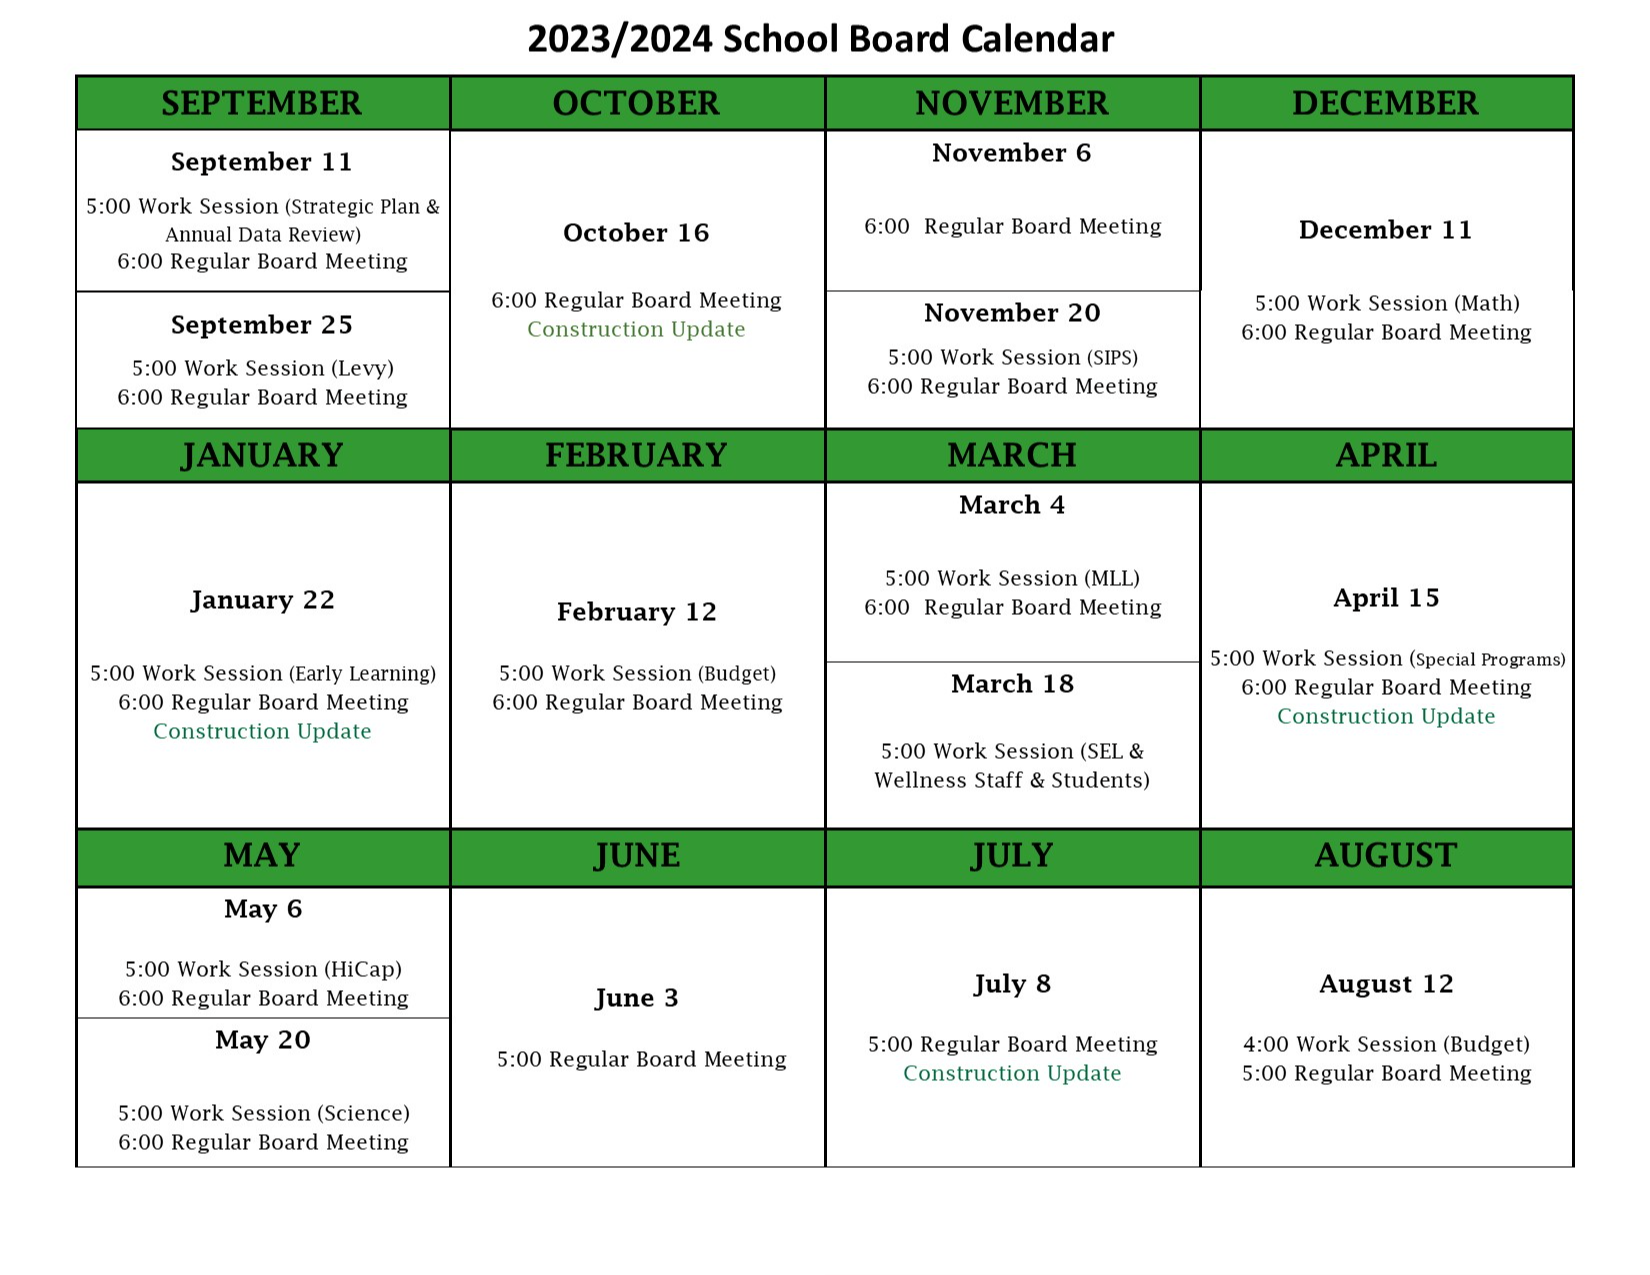 2023-2024 Board Calendar